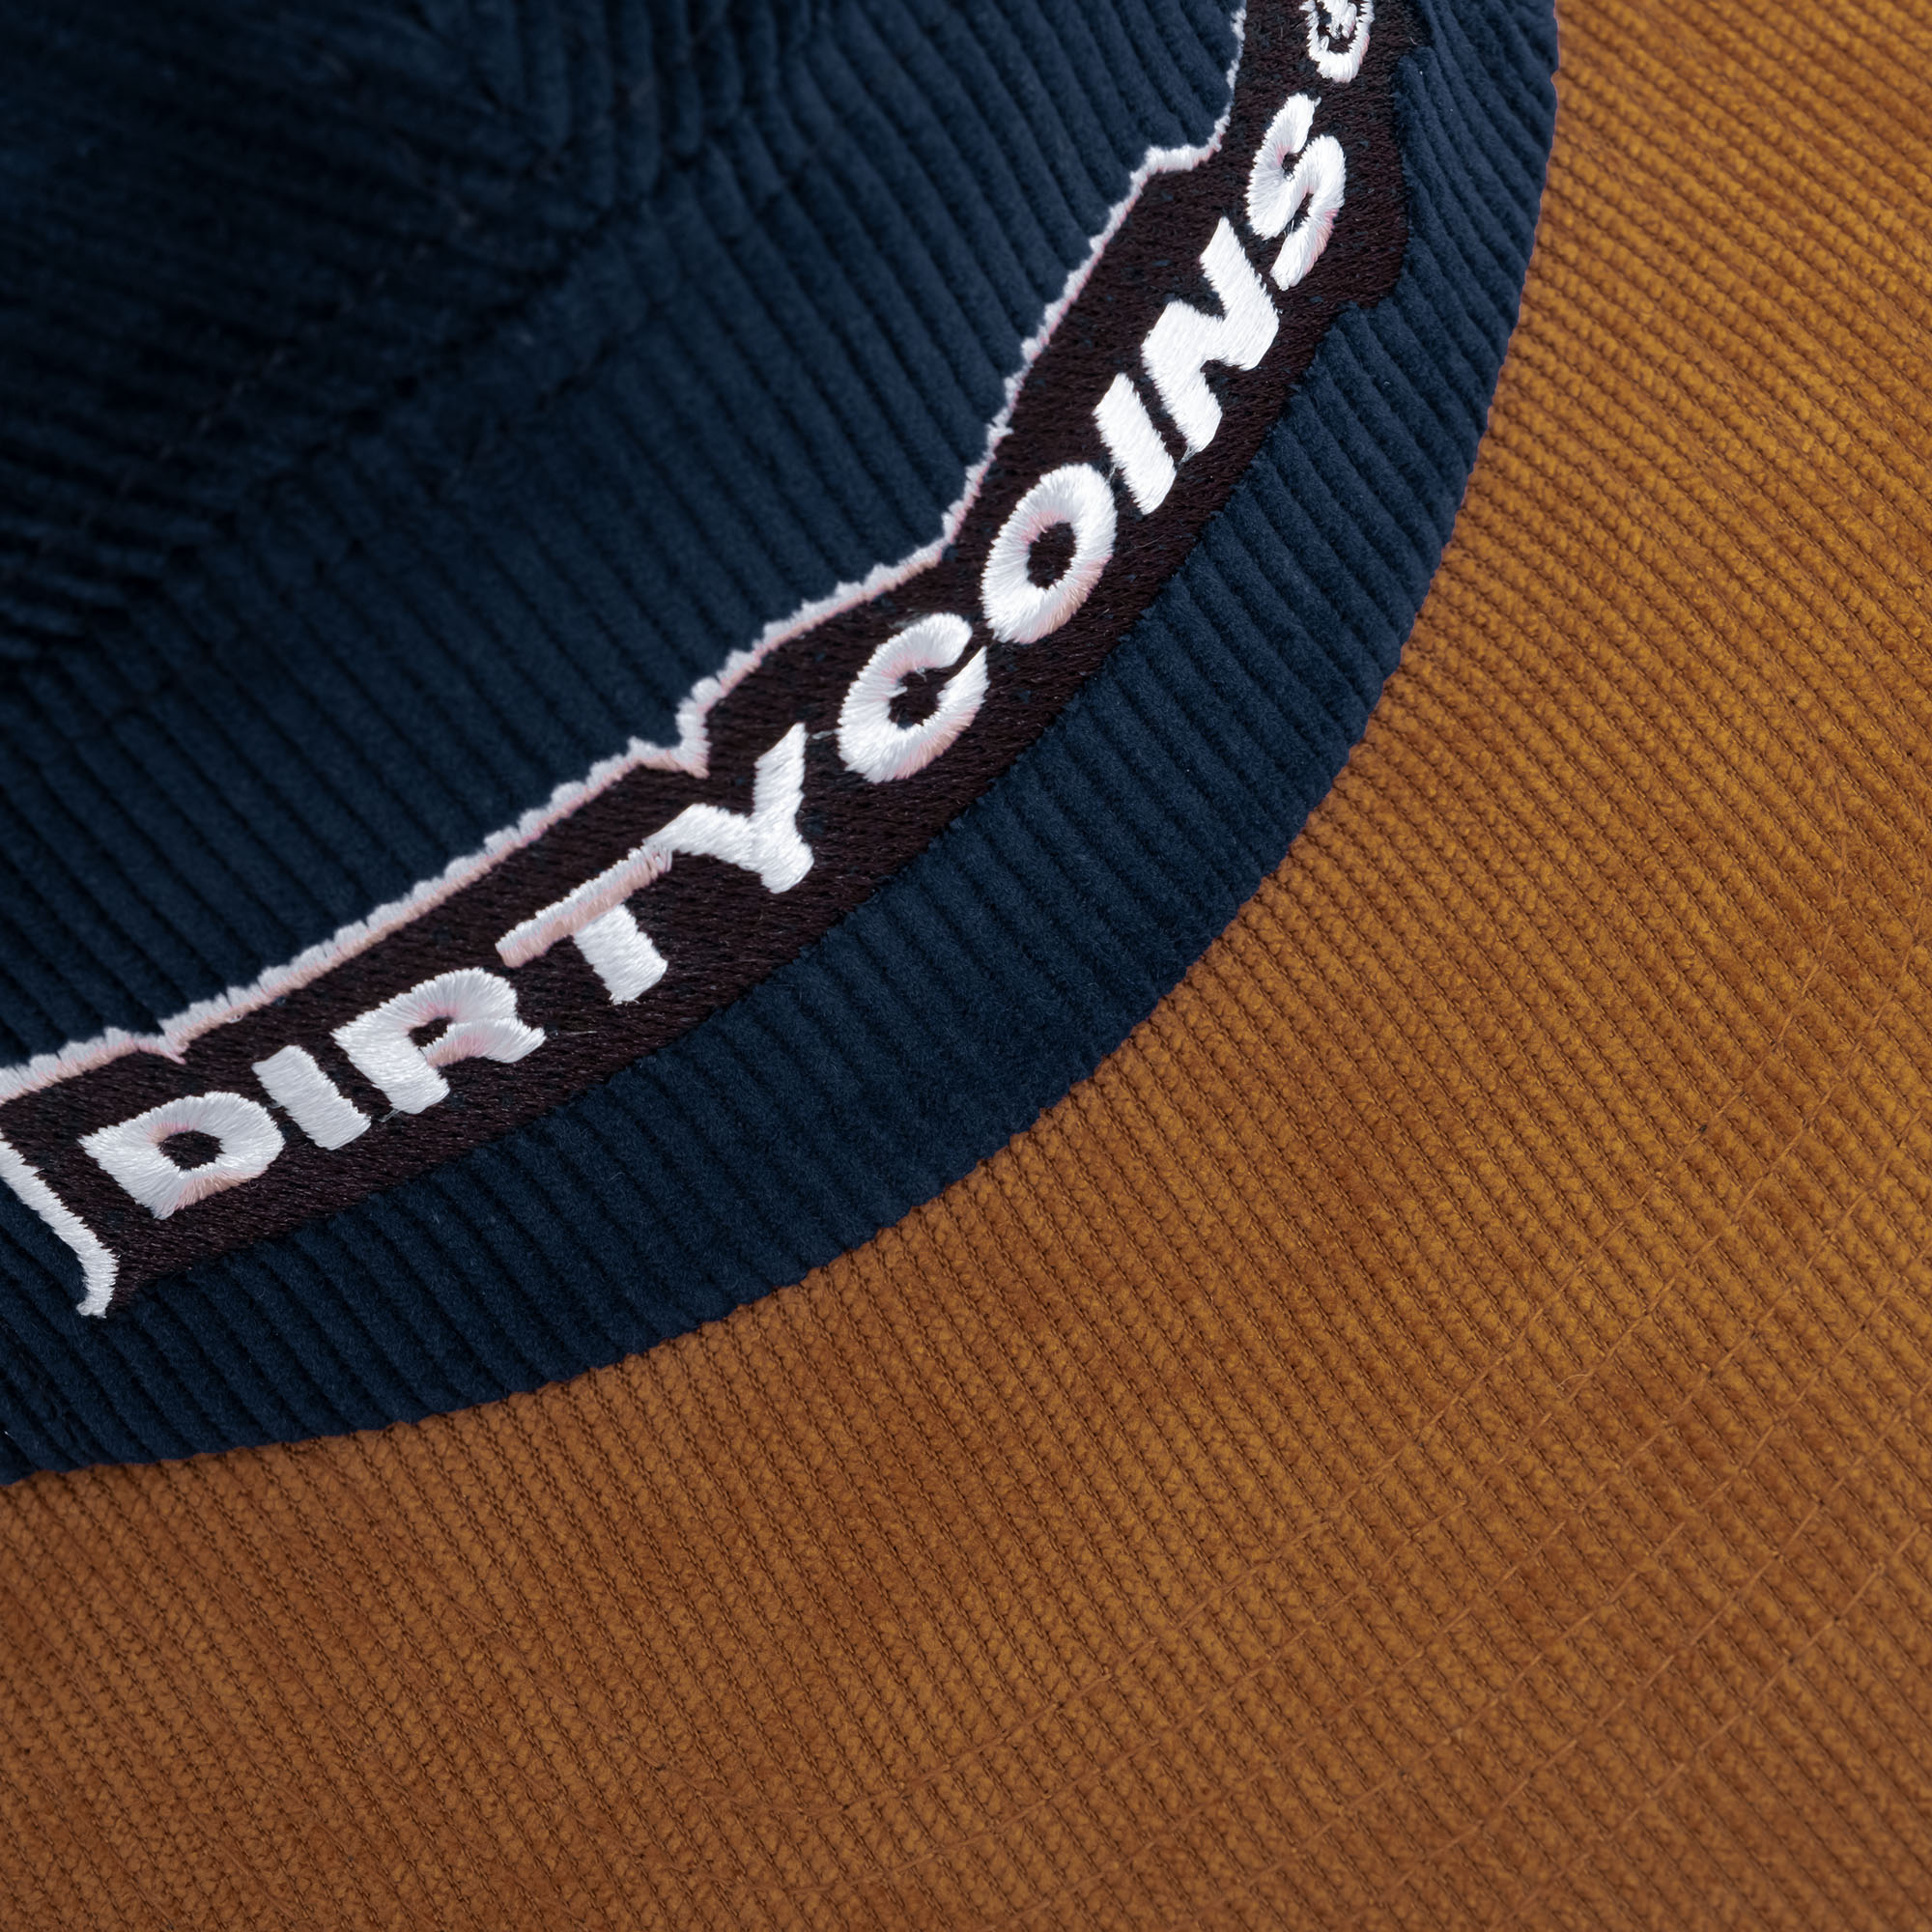 DirtyCoins Corduroy 5 Panels Cap - Blue